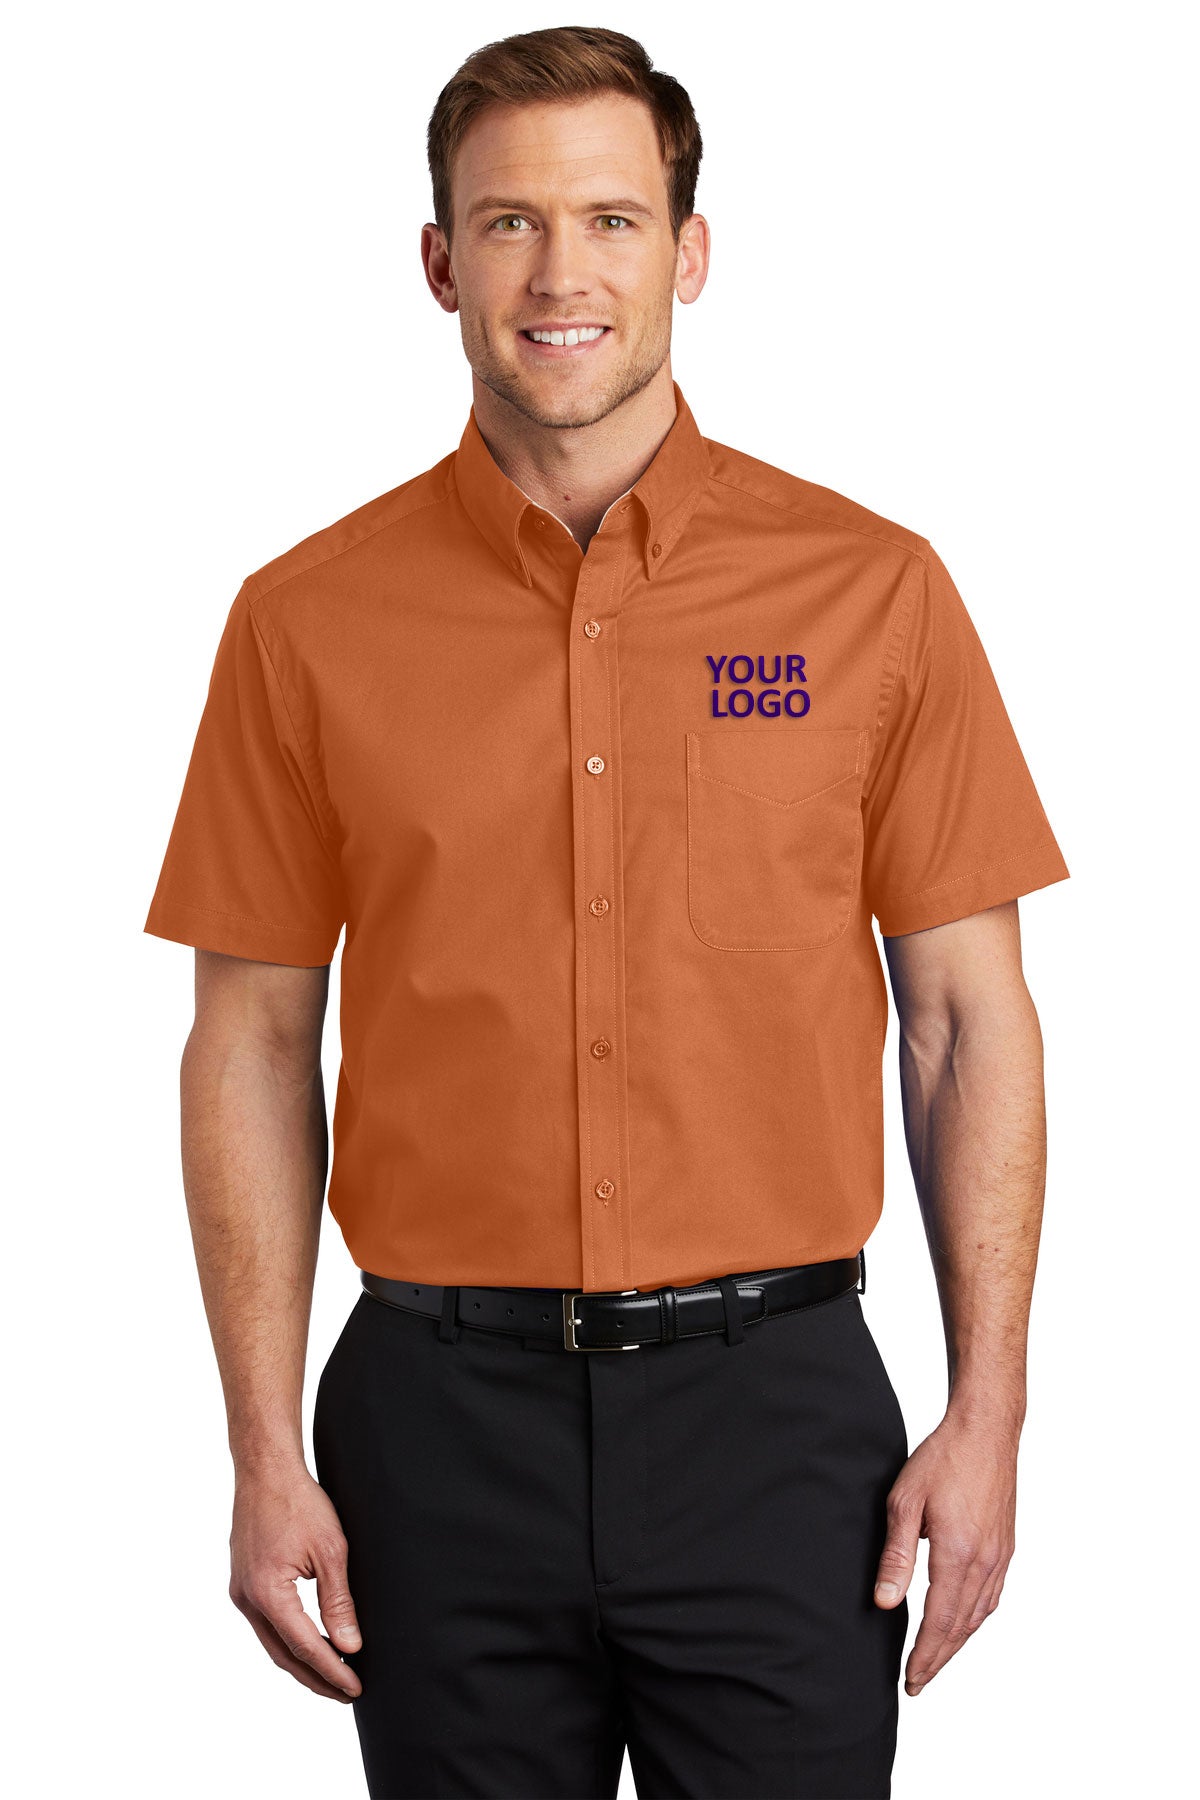 Port Authority Texas Orange/Light Stone S508 custom work shirts